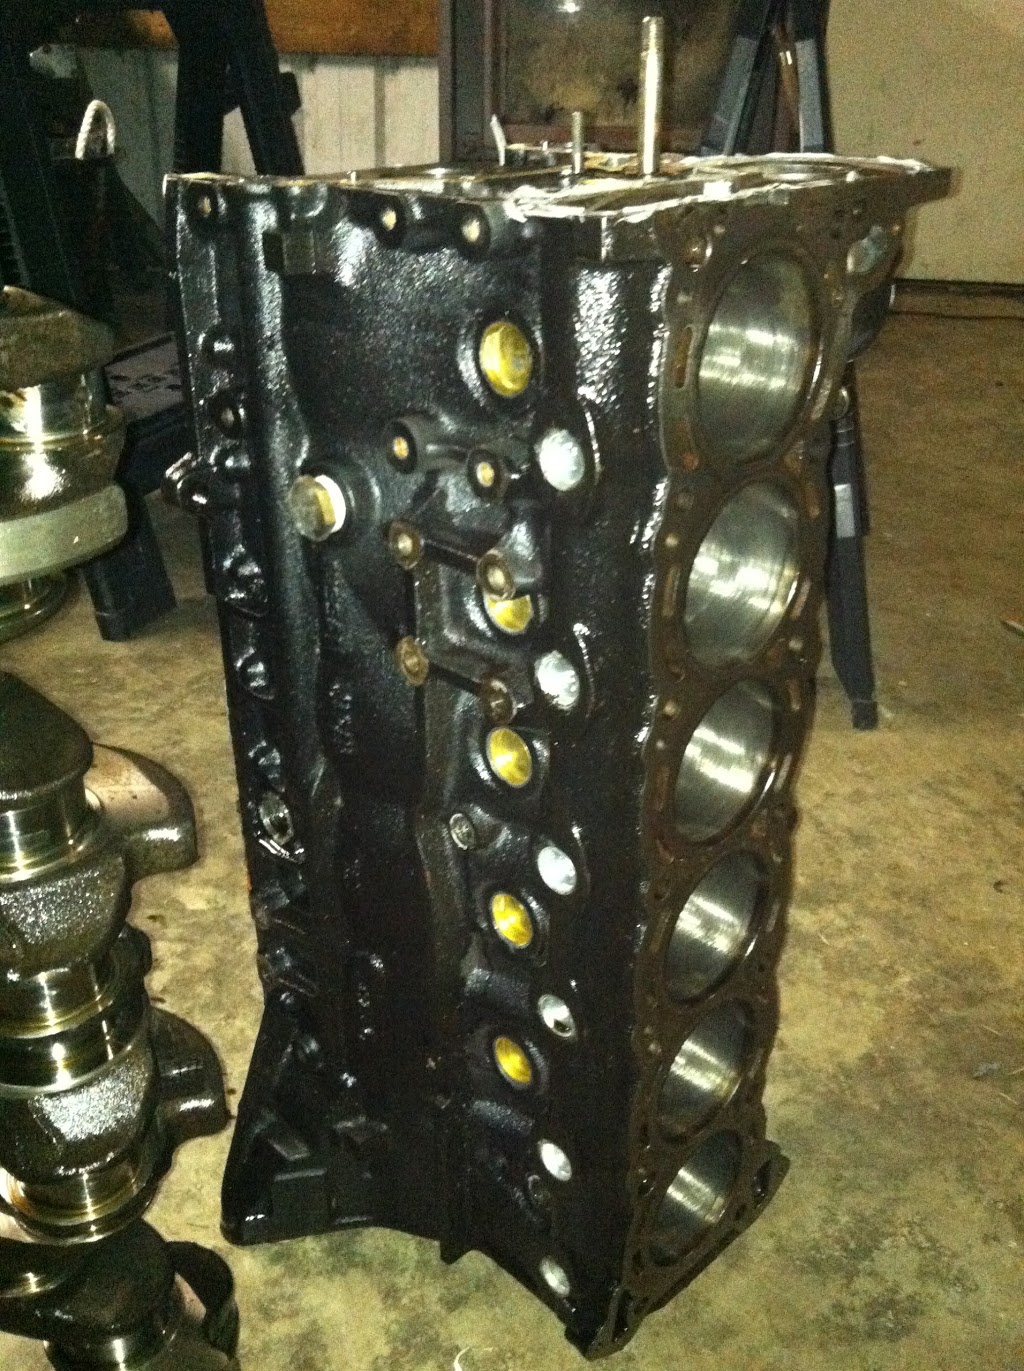 Wilsons Cylinder Heads & Machine | 16190 SW Farmington Rd, Beaverton, OR 97007, USA | Phone: (971) 570-6009